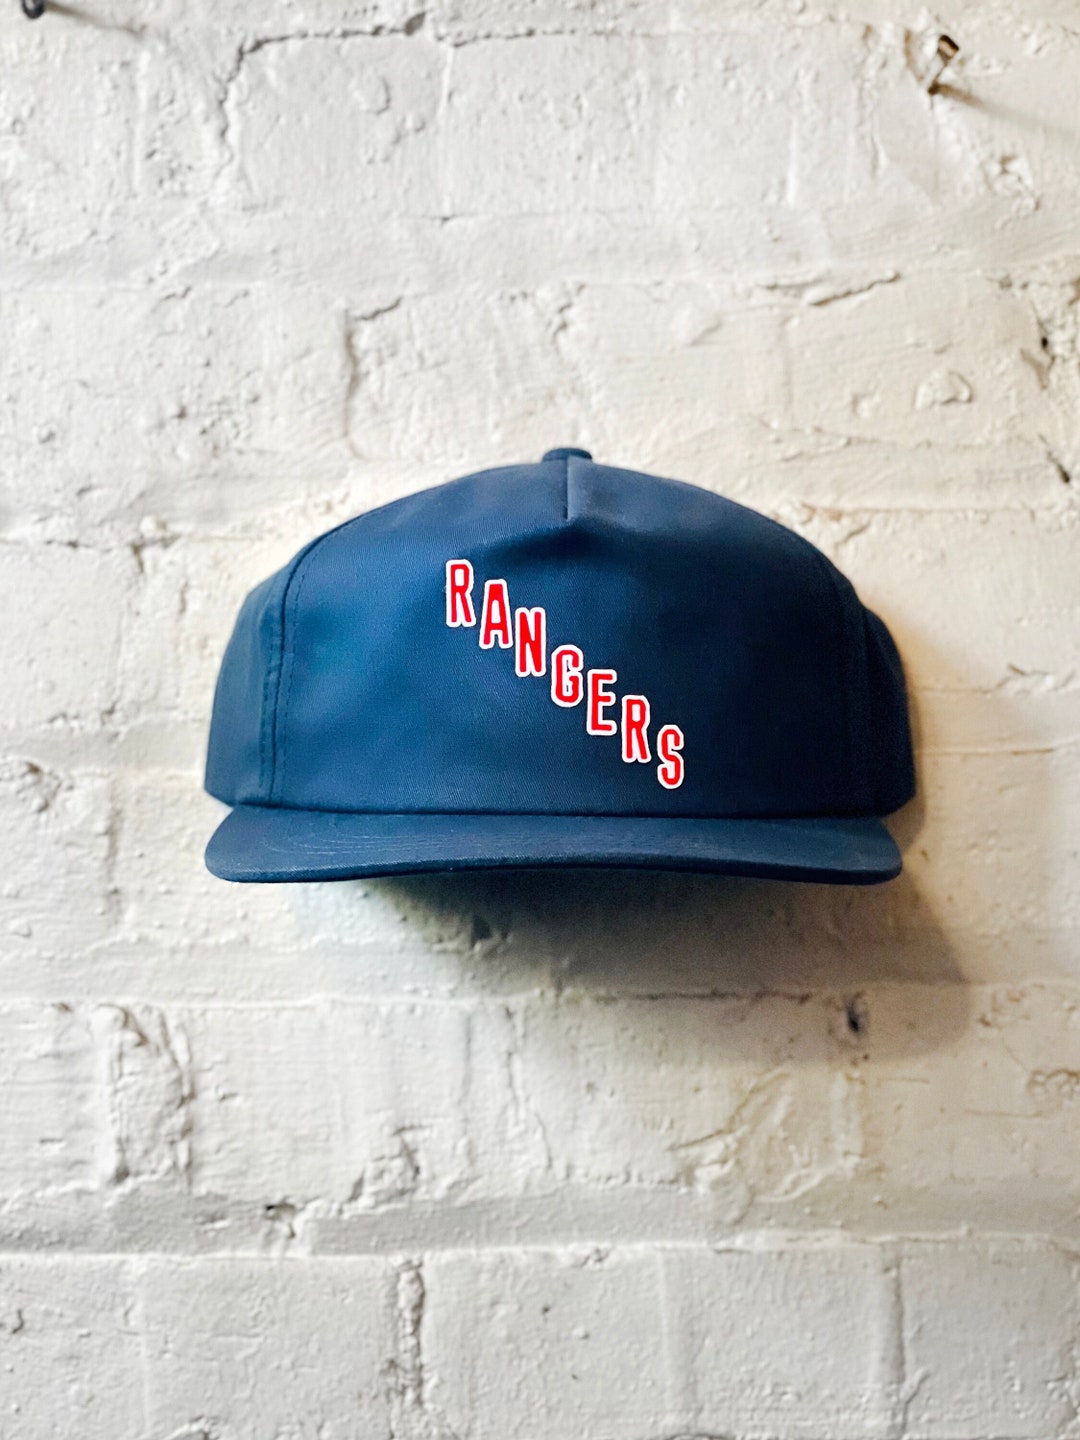 NHL, Accessories, New York Rangers Hat